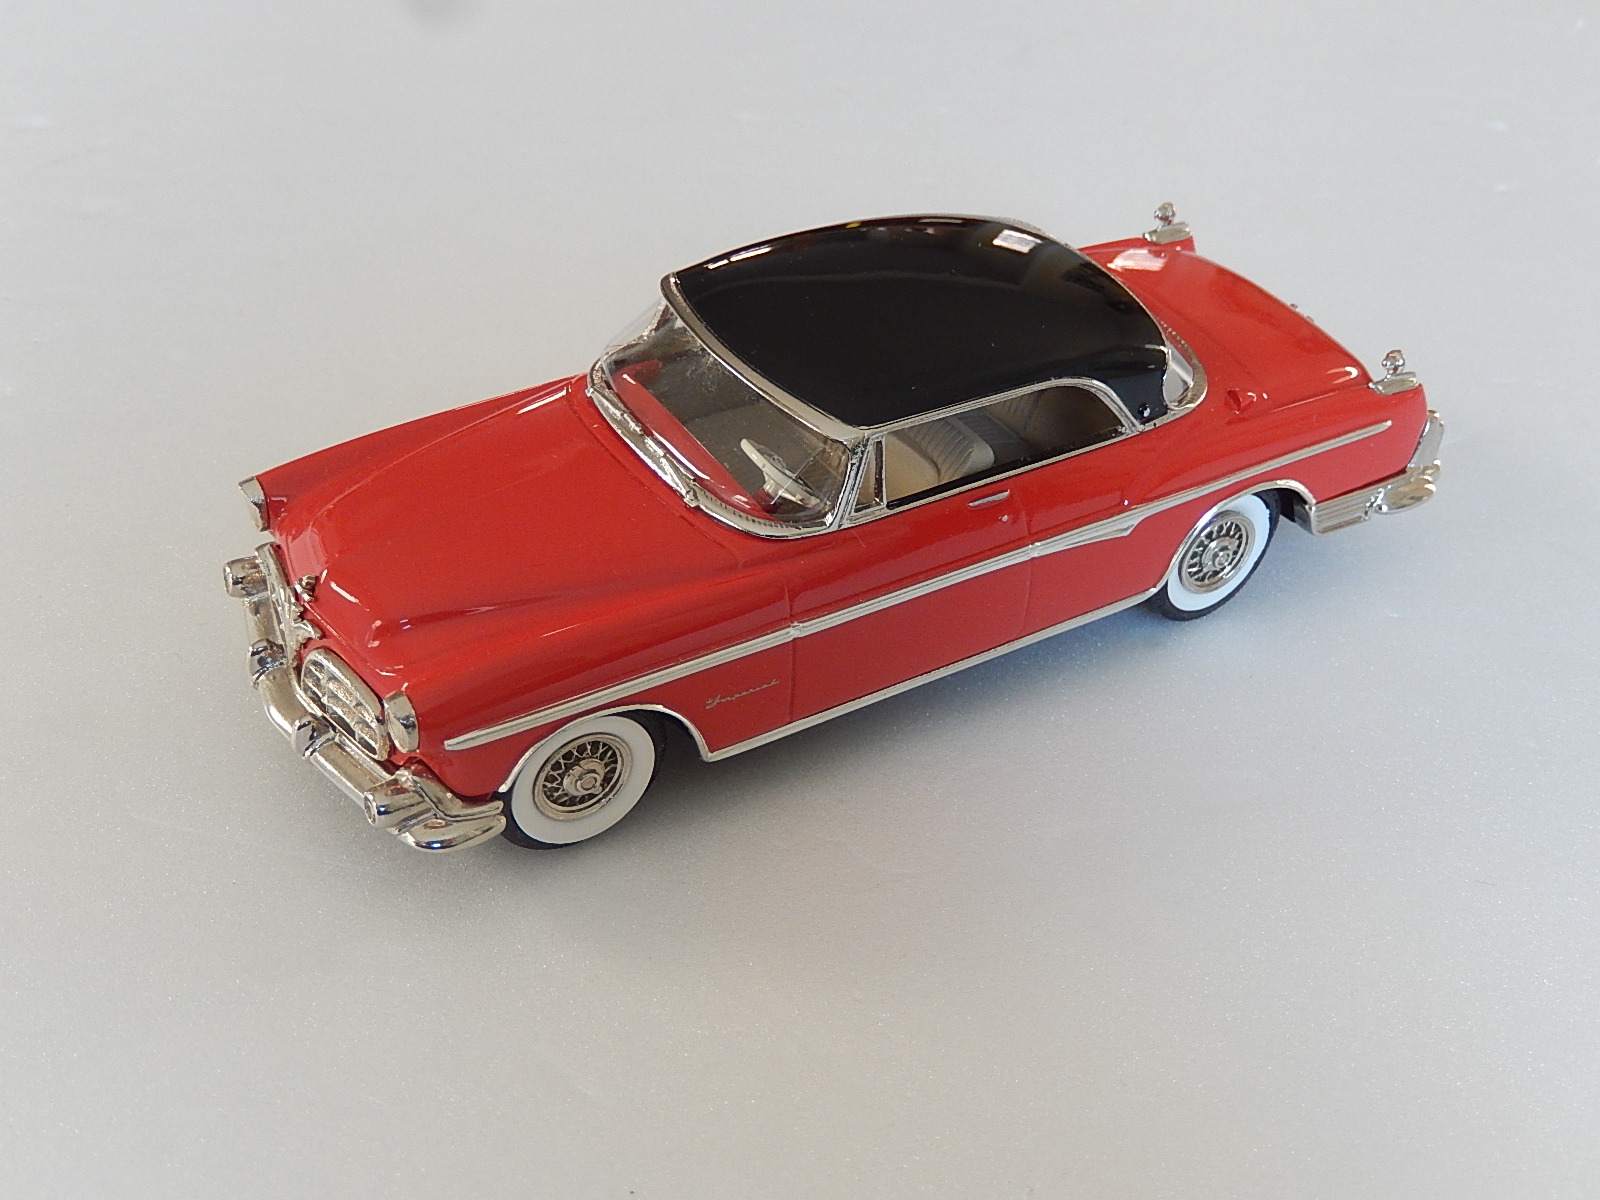 Motor City : 1955 Chrysler Imperial Tango --> SOLD